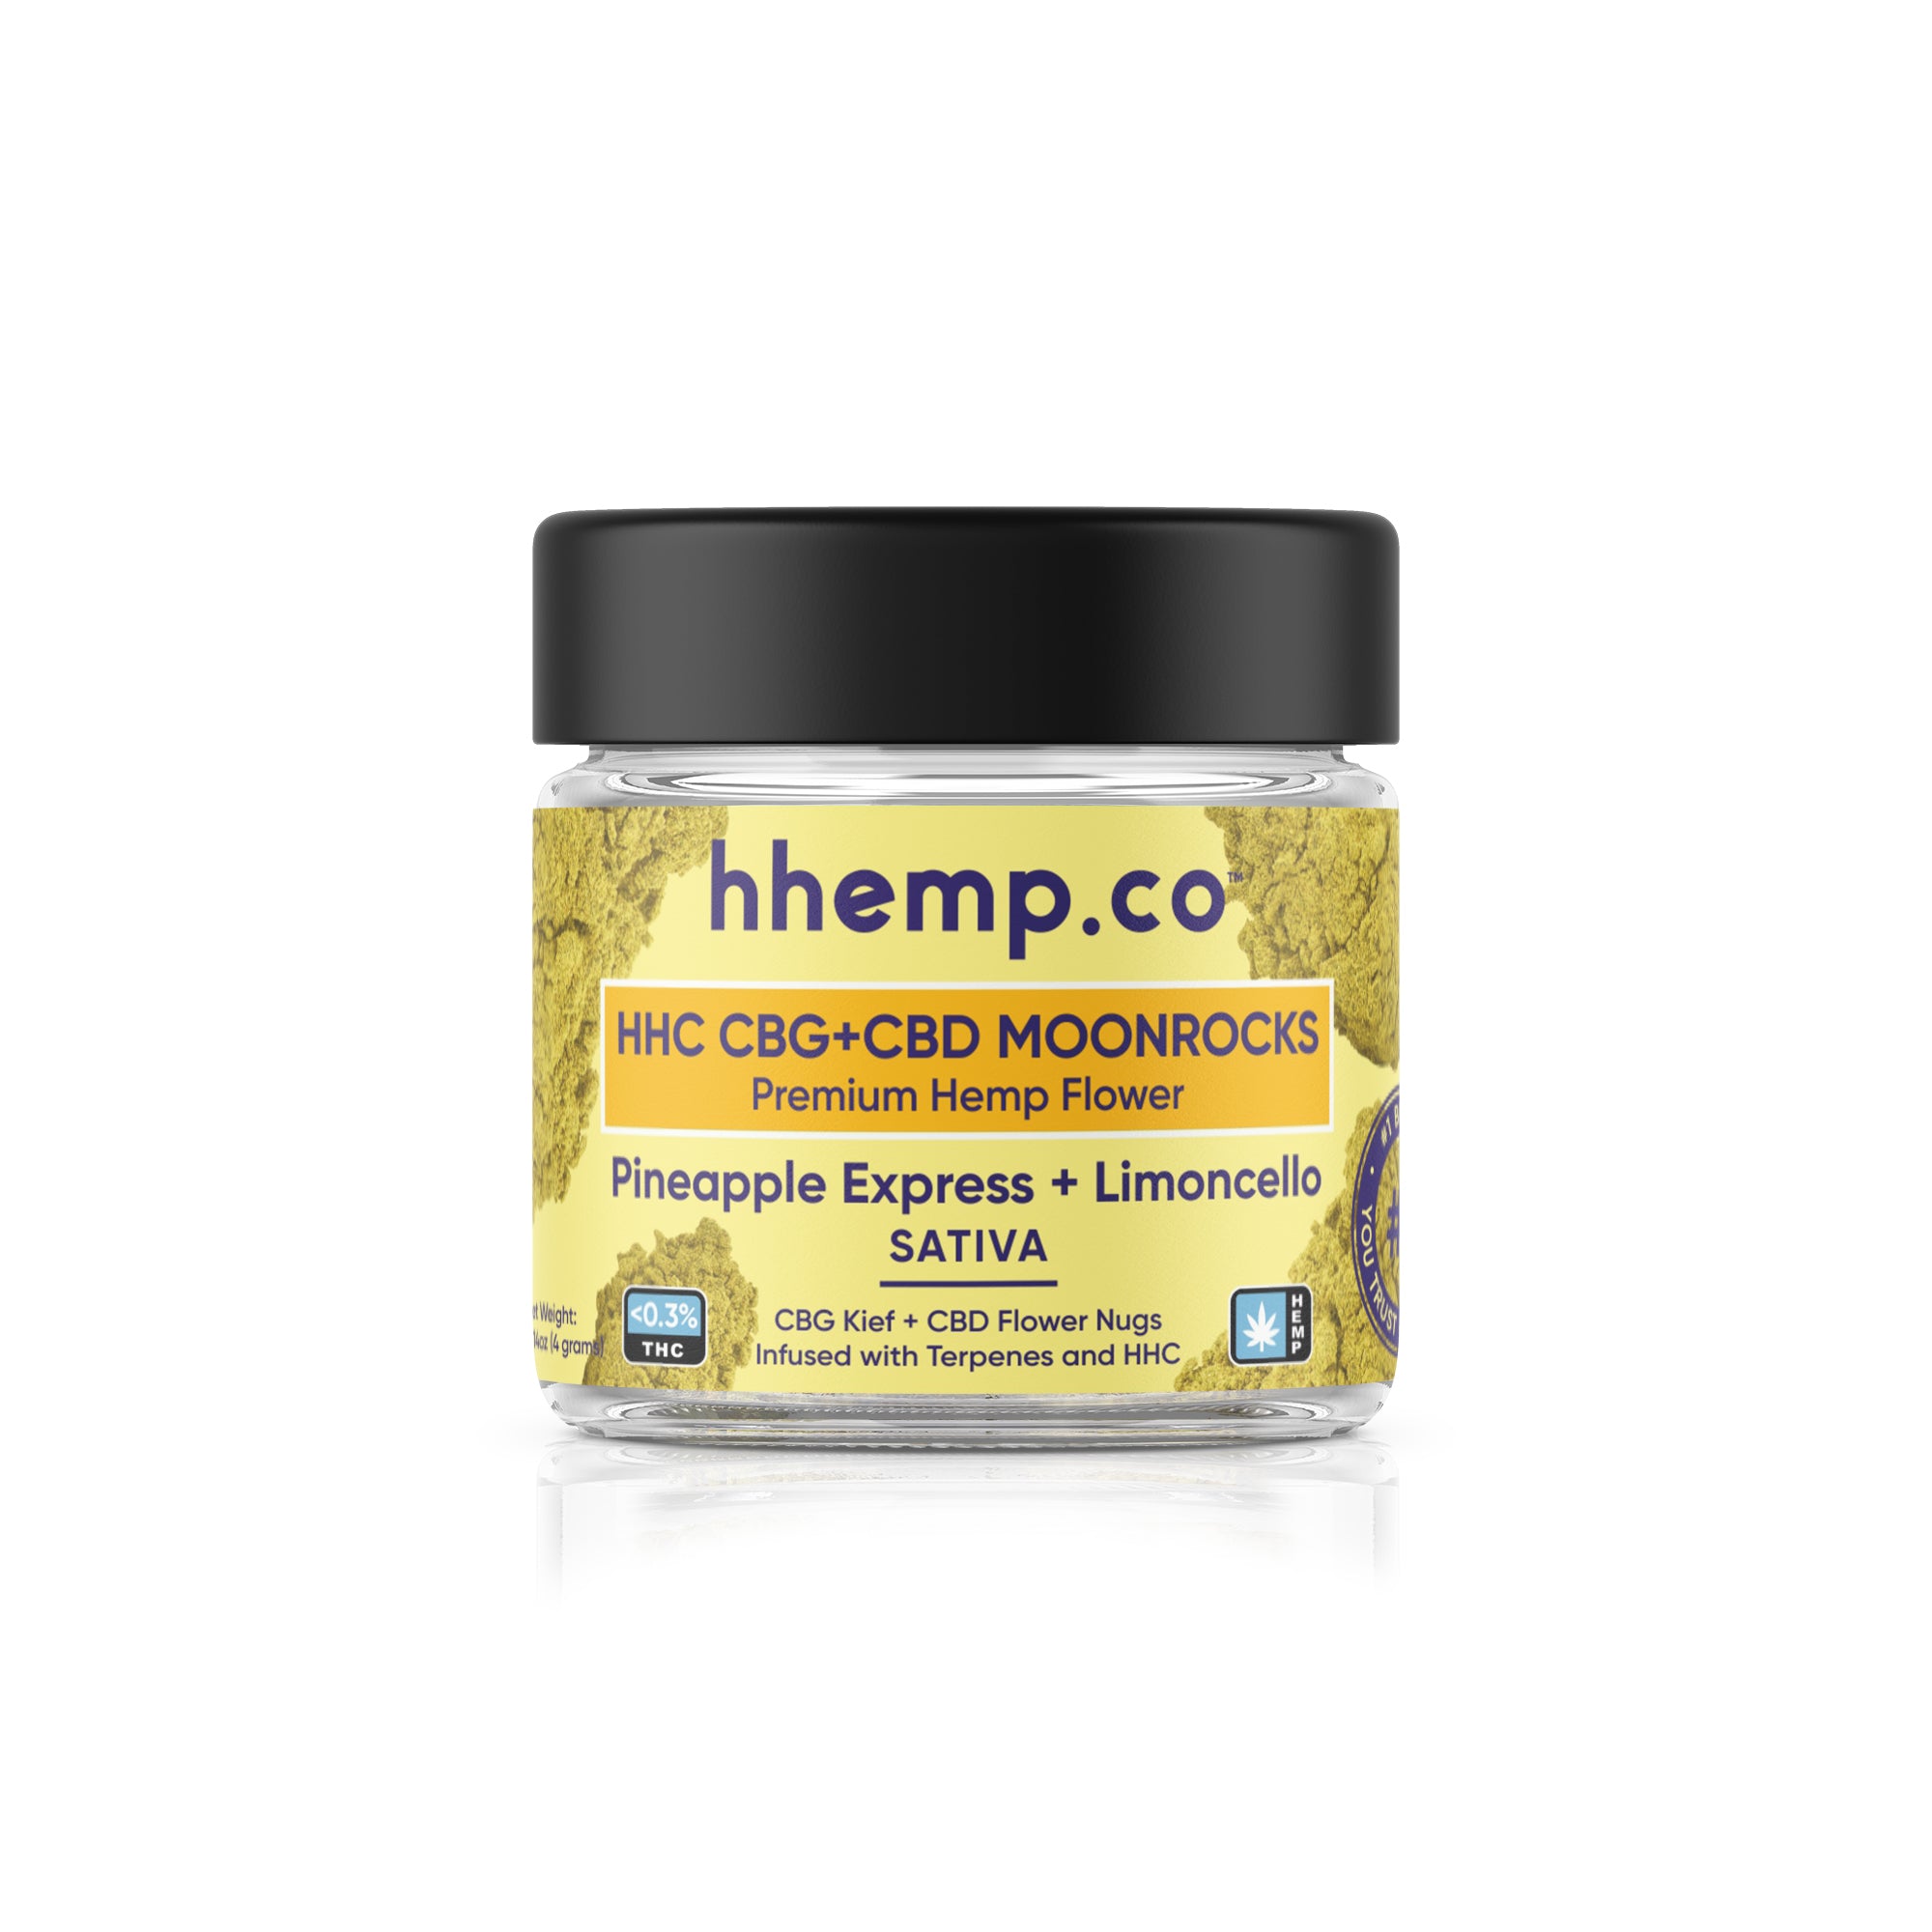 hhemp.co HHC Moonrock Flower - Pineapple Express+Limoncello (Sativa)